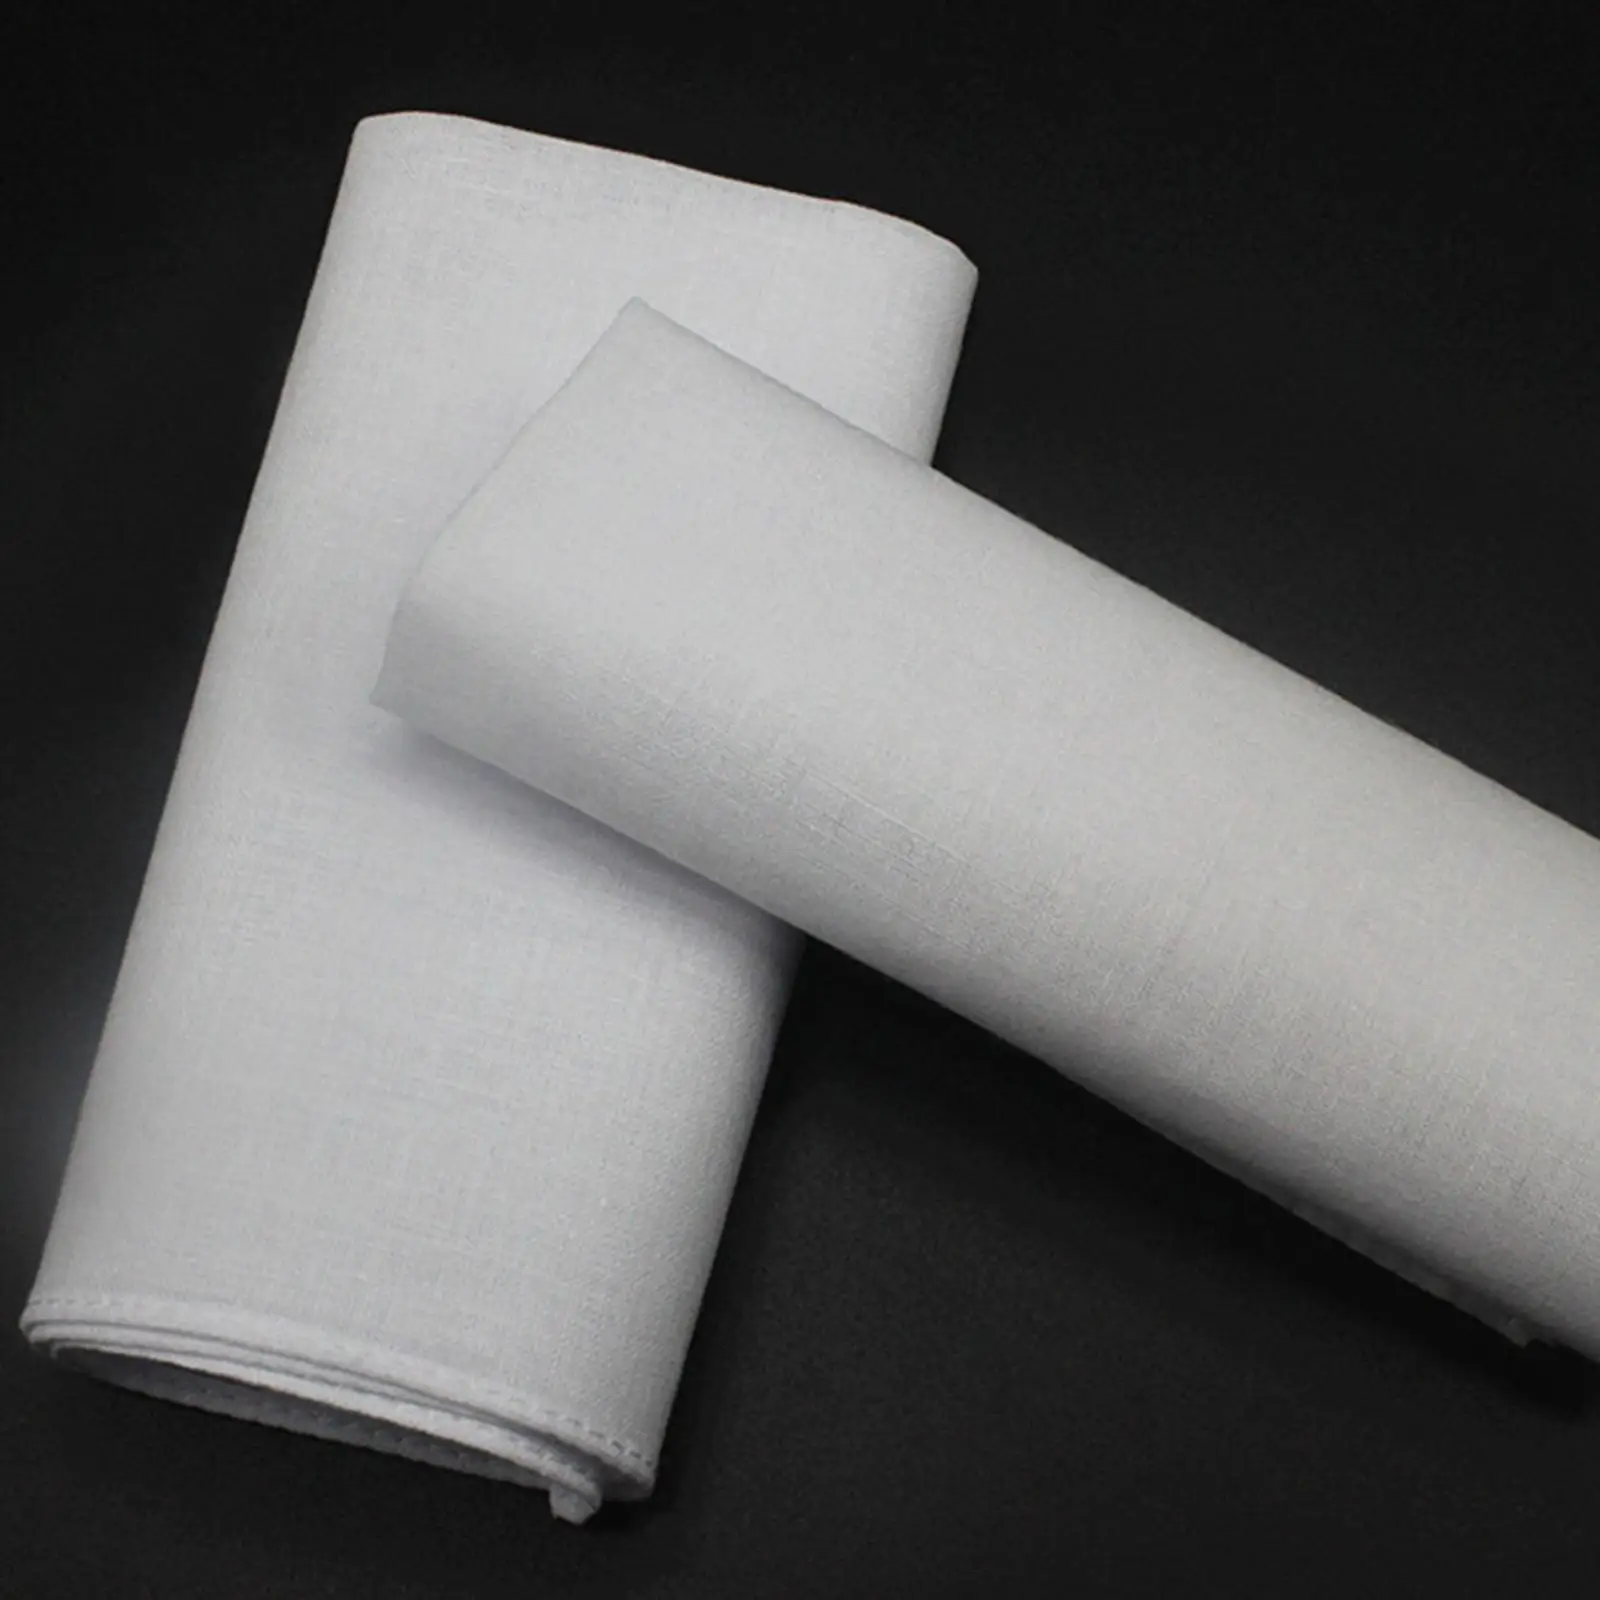 

10 Pieces Solid White Handkerchiefs for Men Suit Pure Cotton 42S 26cm/10inch Pocket Squares White Hankies for Handmade Crafts